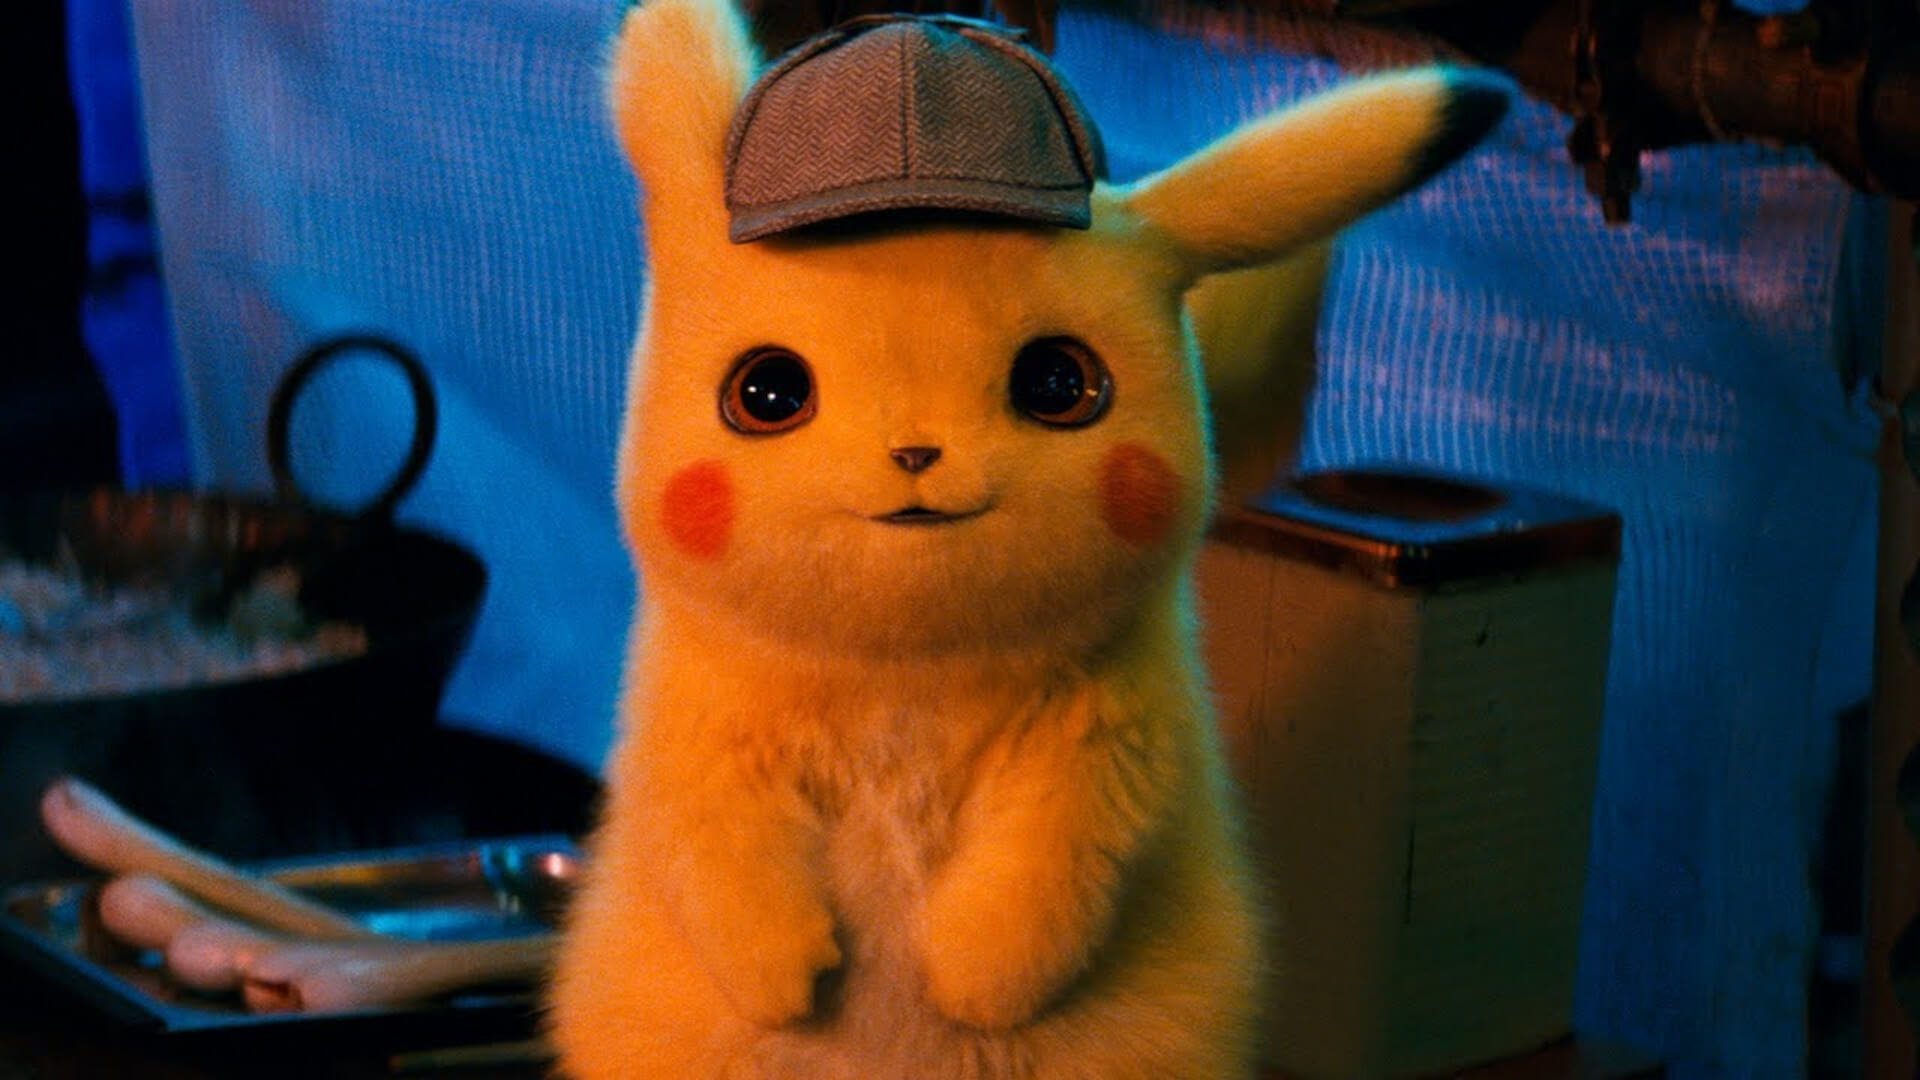 Ryan Reynolds as Detective Pikachu in the 2019 movie